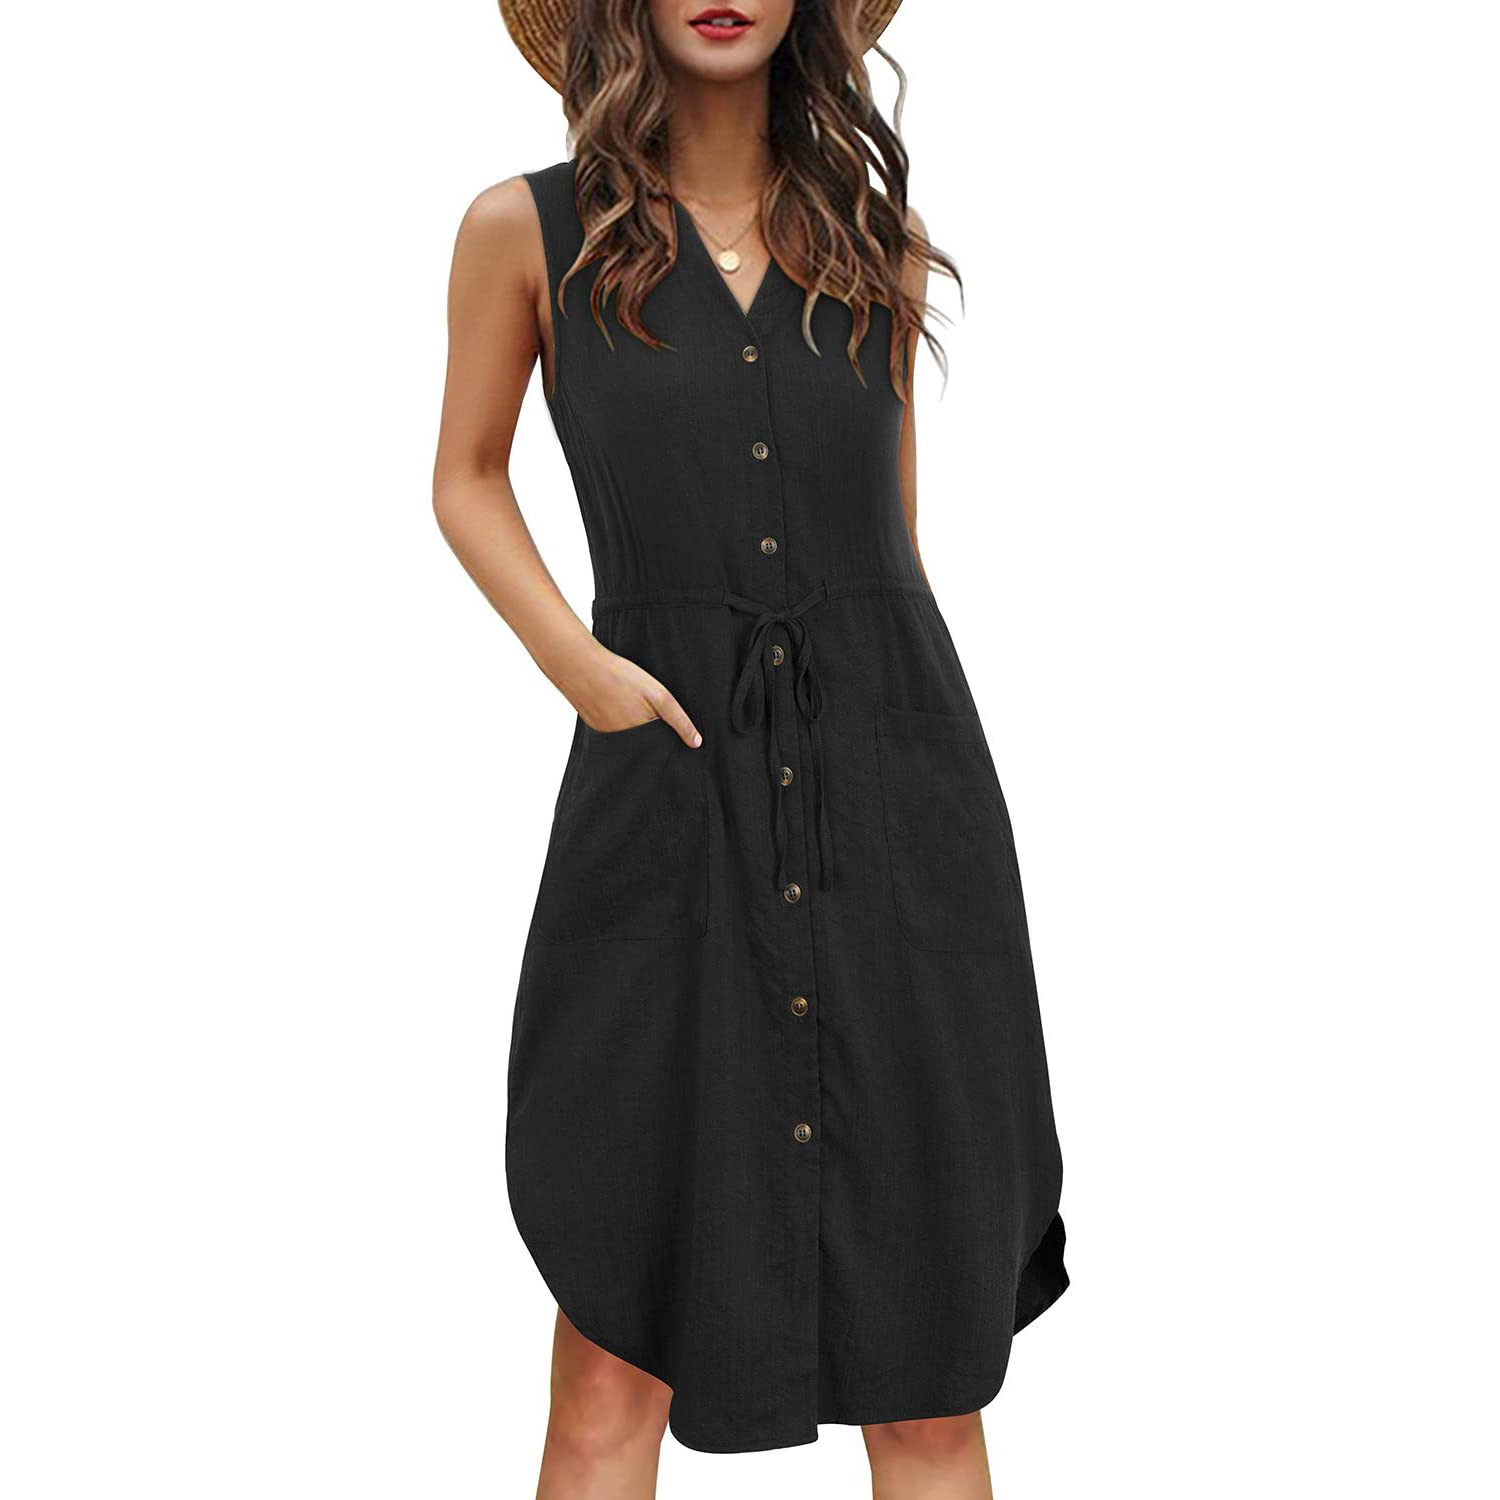 New Sling Button Pocket Dress - Black, Xl